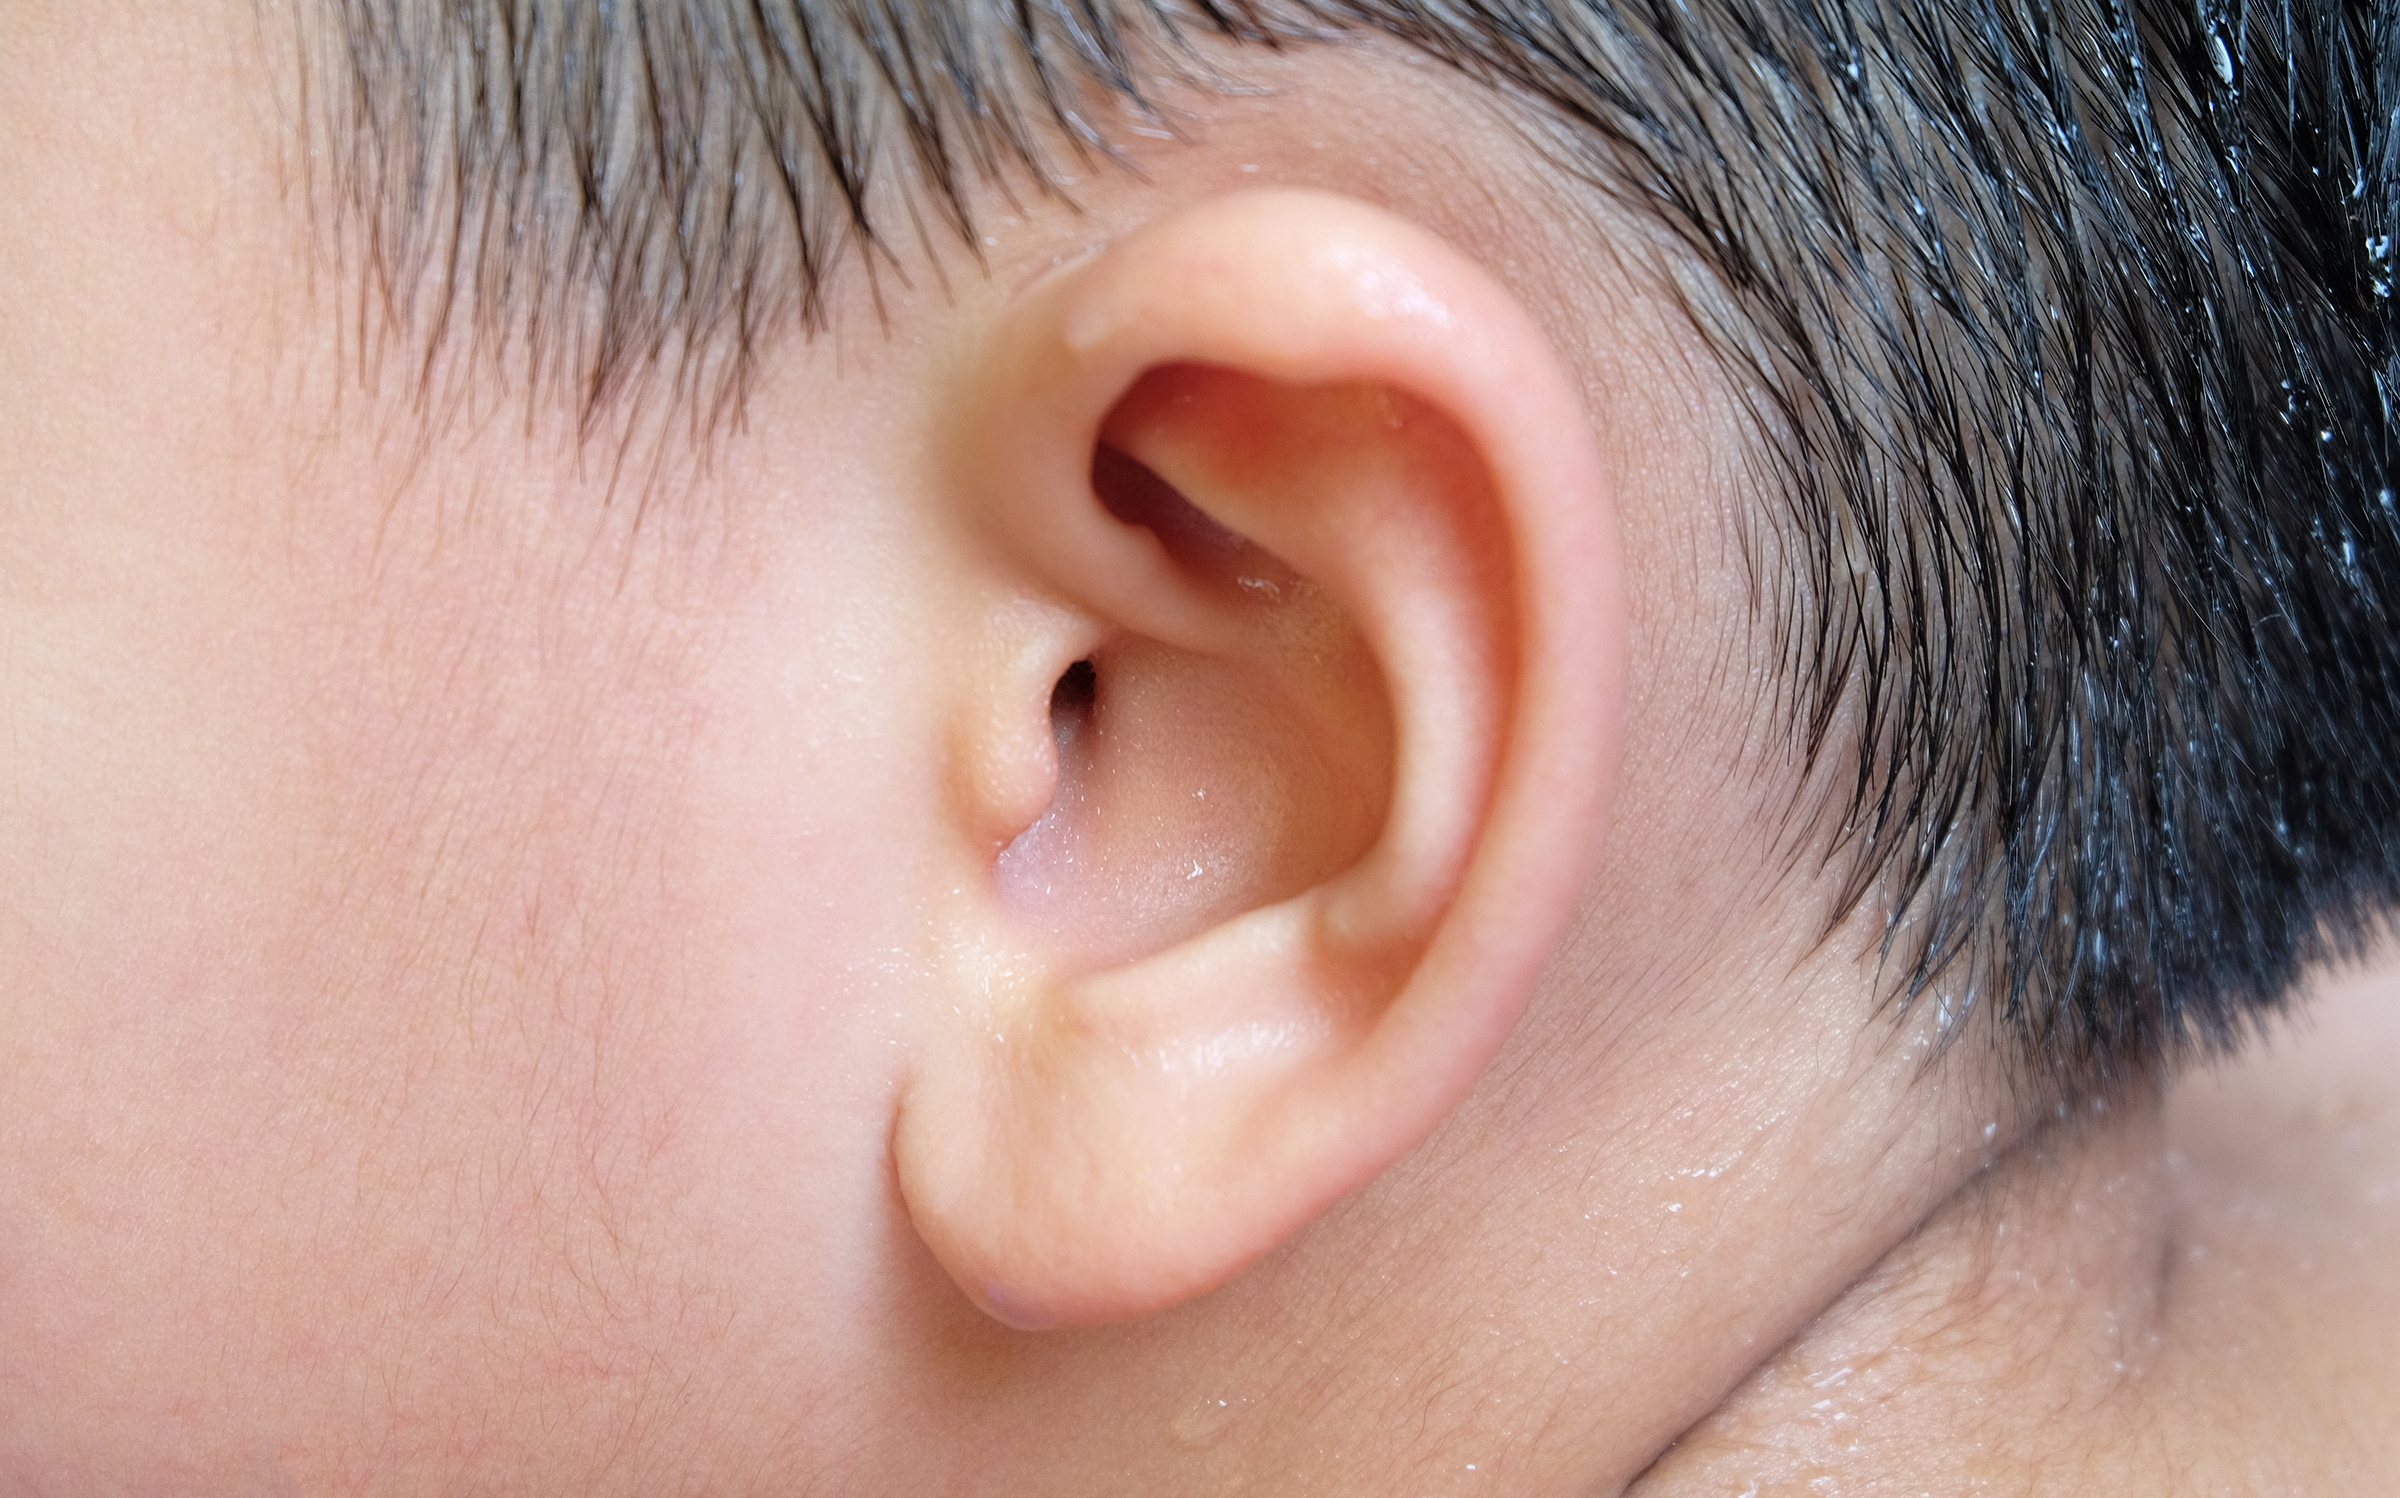 Oman Health: Ear infection in children